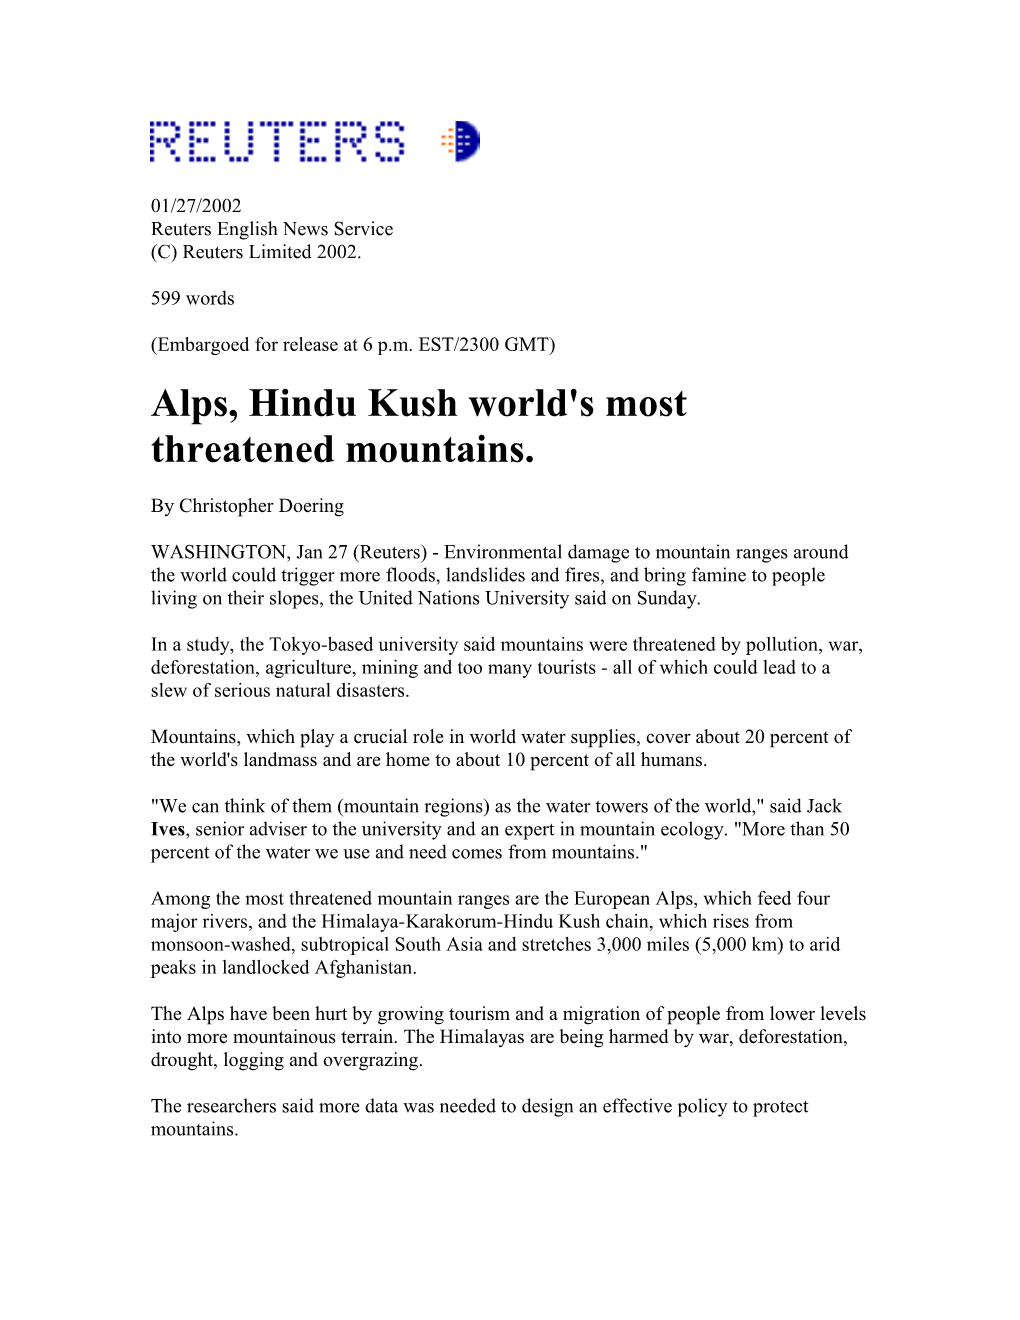 USA: Alps, Hindu Kush World's Most Threatened Mountains